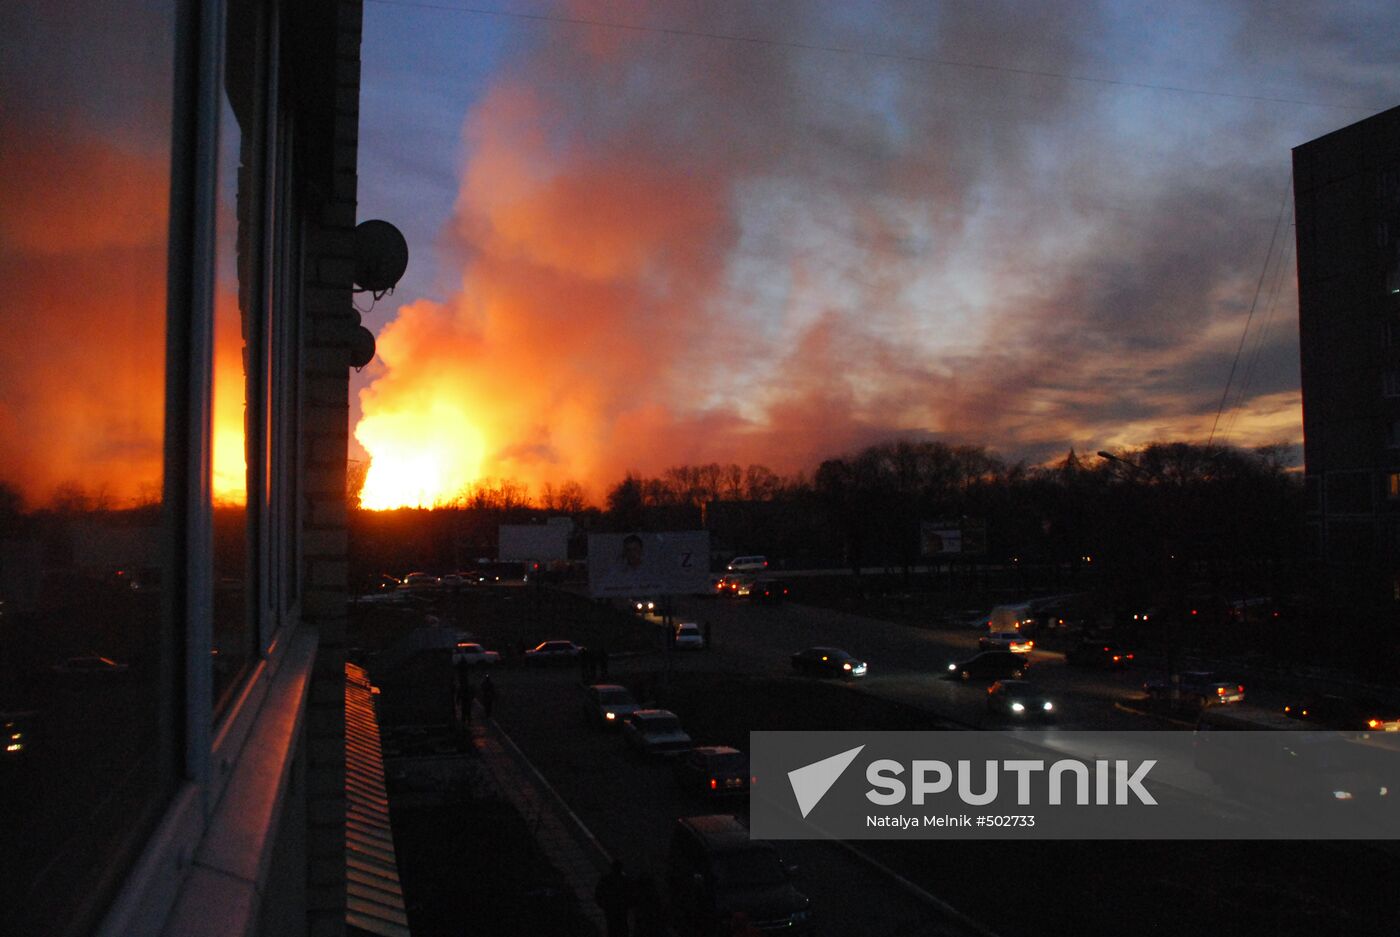 Arms depot blasts in Ulyanovsk Region